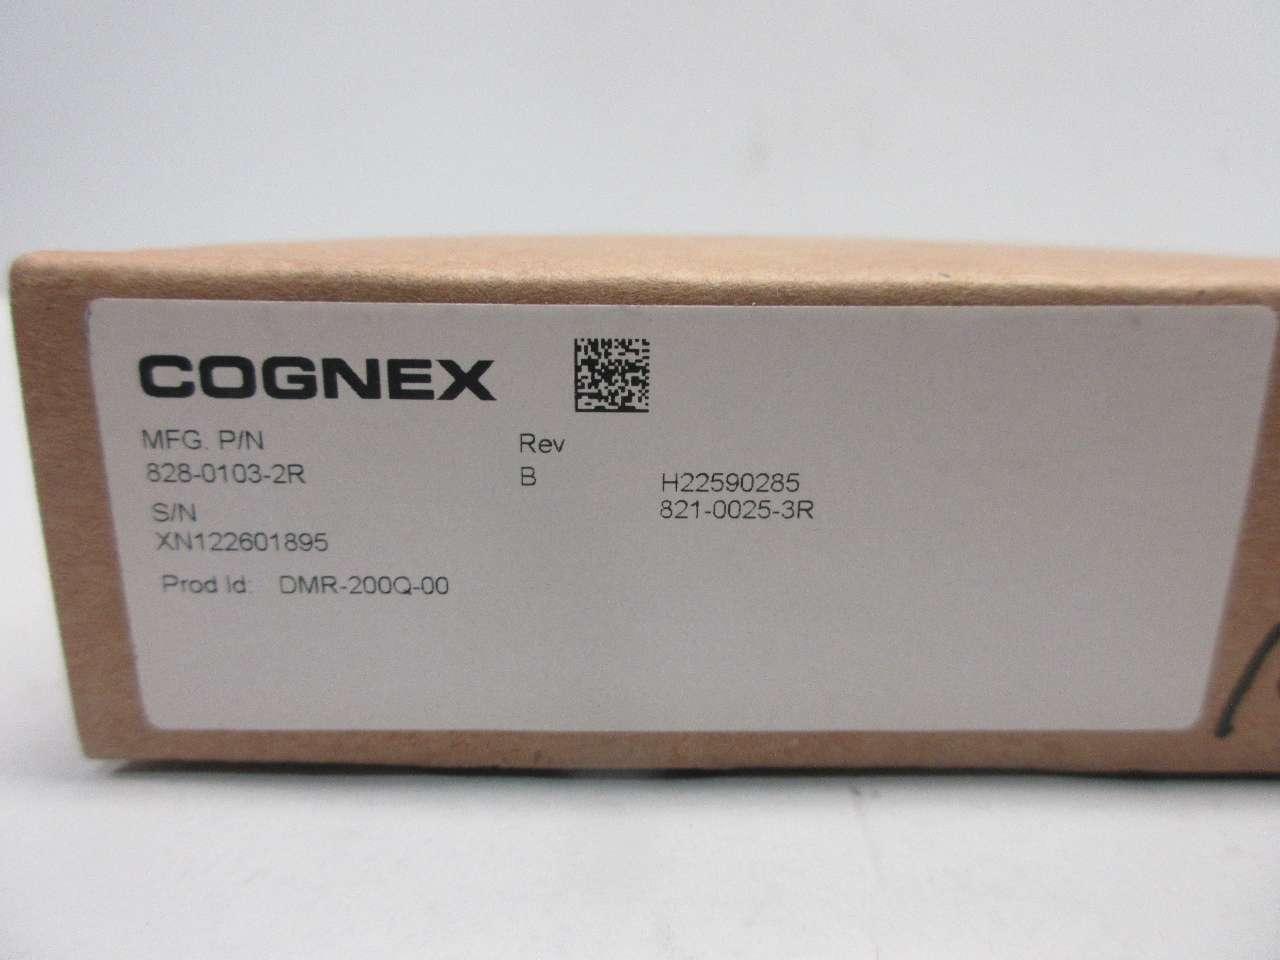 Cognex Dataman DM200Q DM200 DM200Q-00 W/ Adjustable Focus Lens DMR